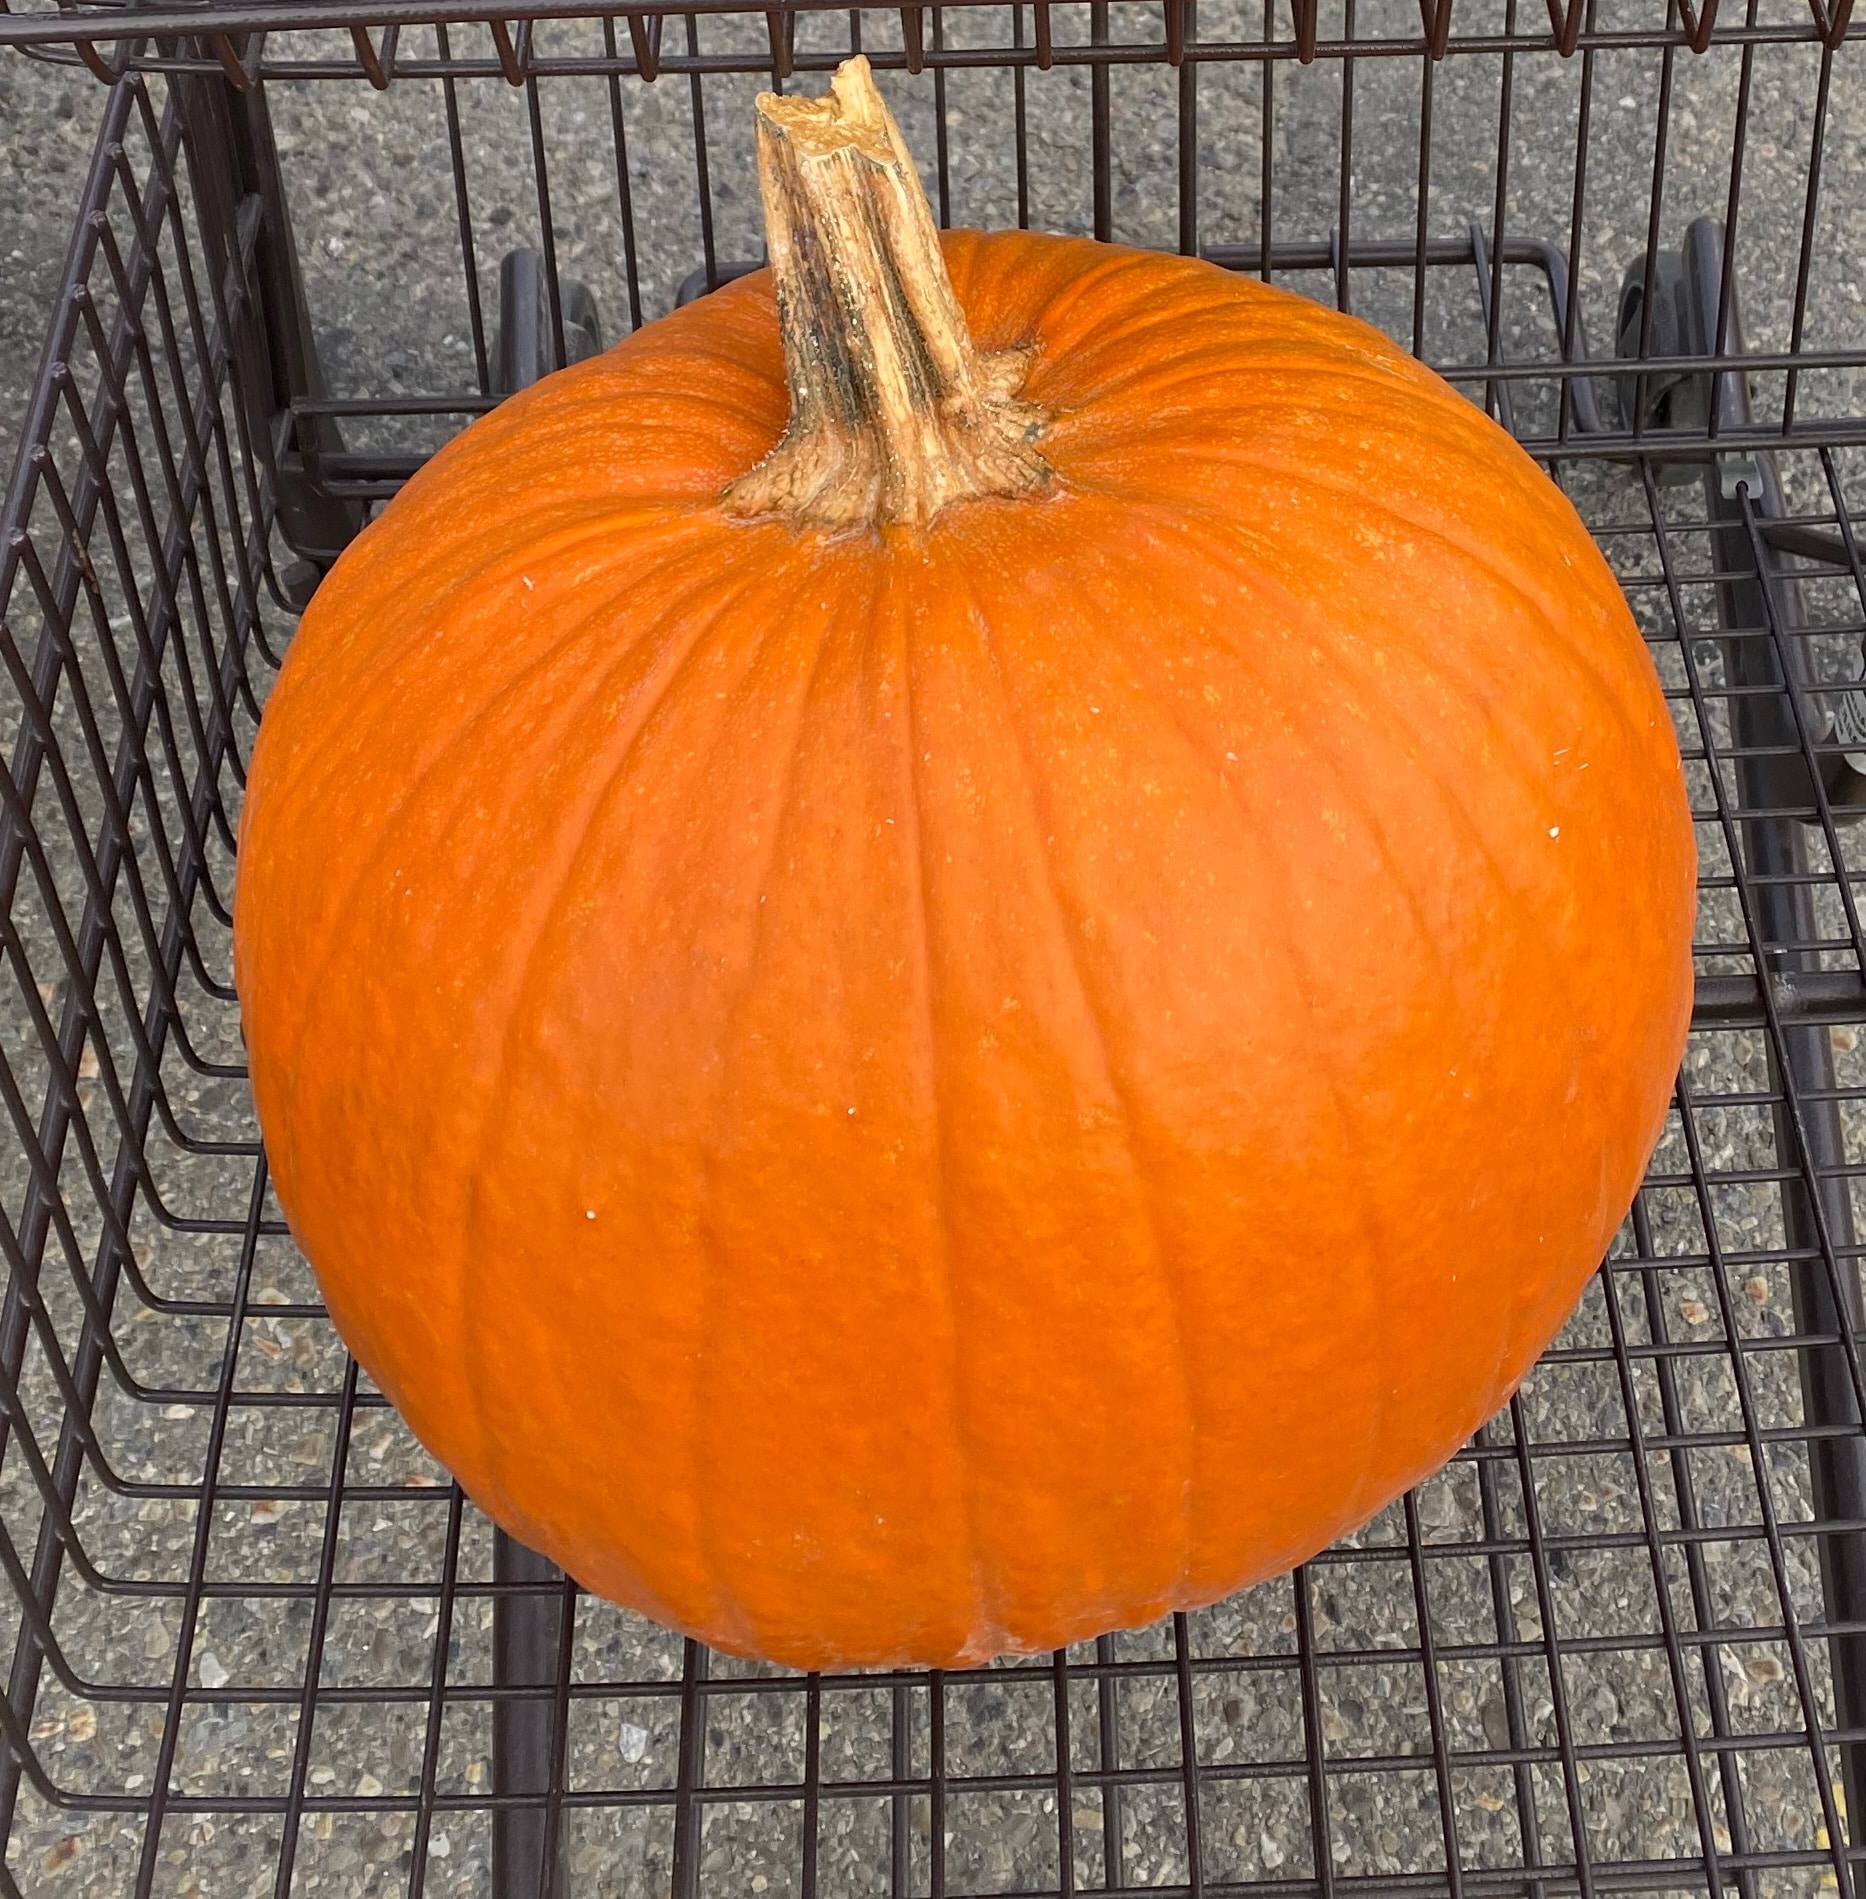 Pumpkin in a grocery cart